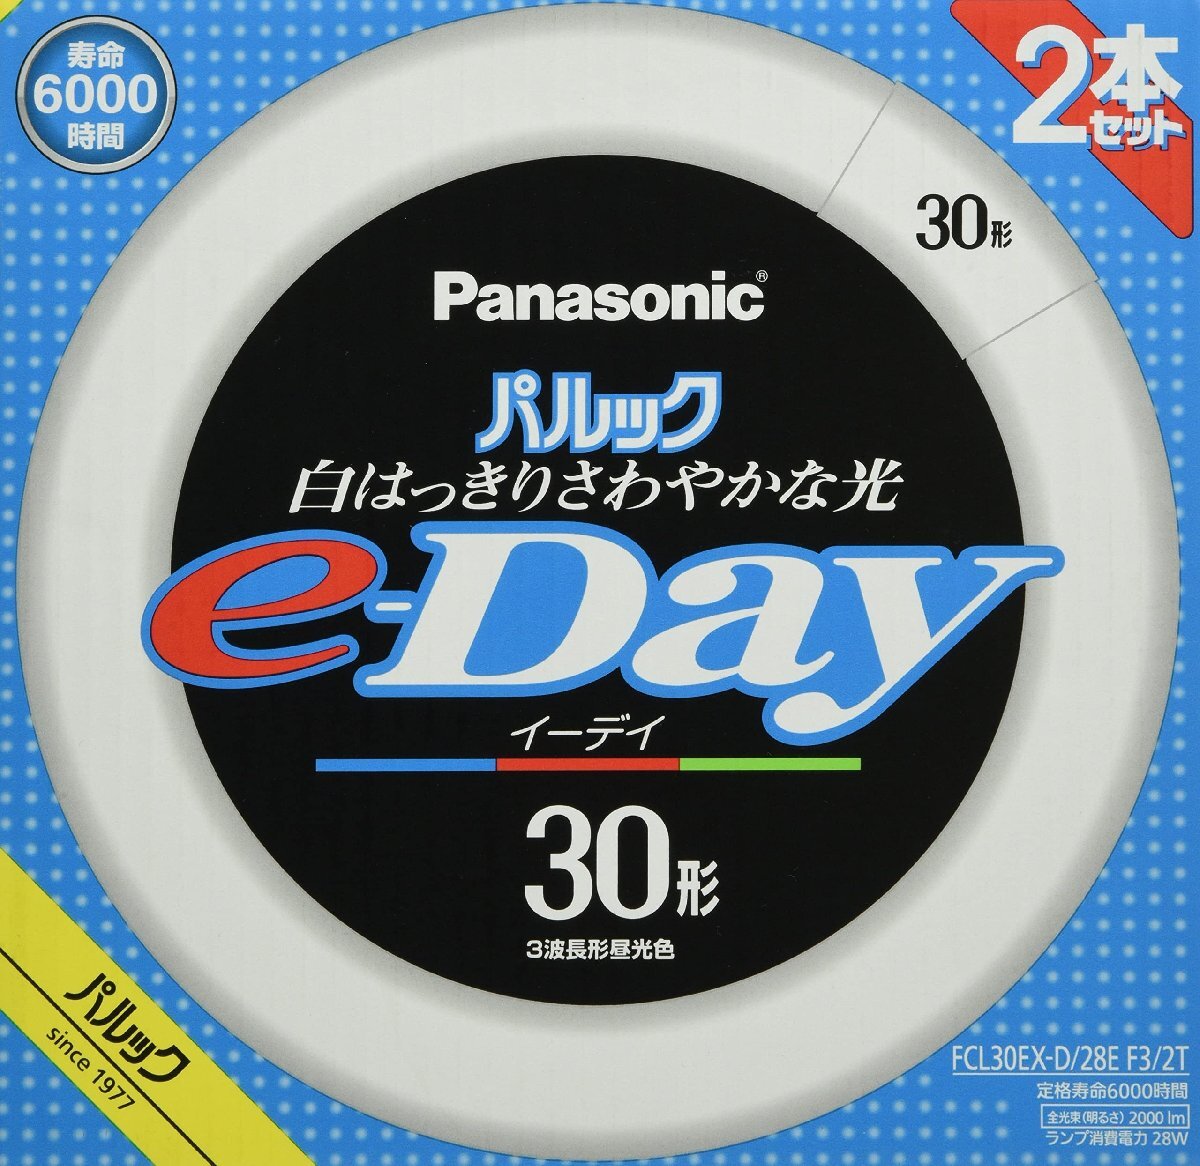  Panasonic лампа дневного света круг форма 30 форма 2 шт. входит днем свет цвет pa look e-Day FCL30EXD28EF32T